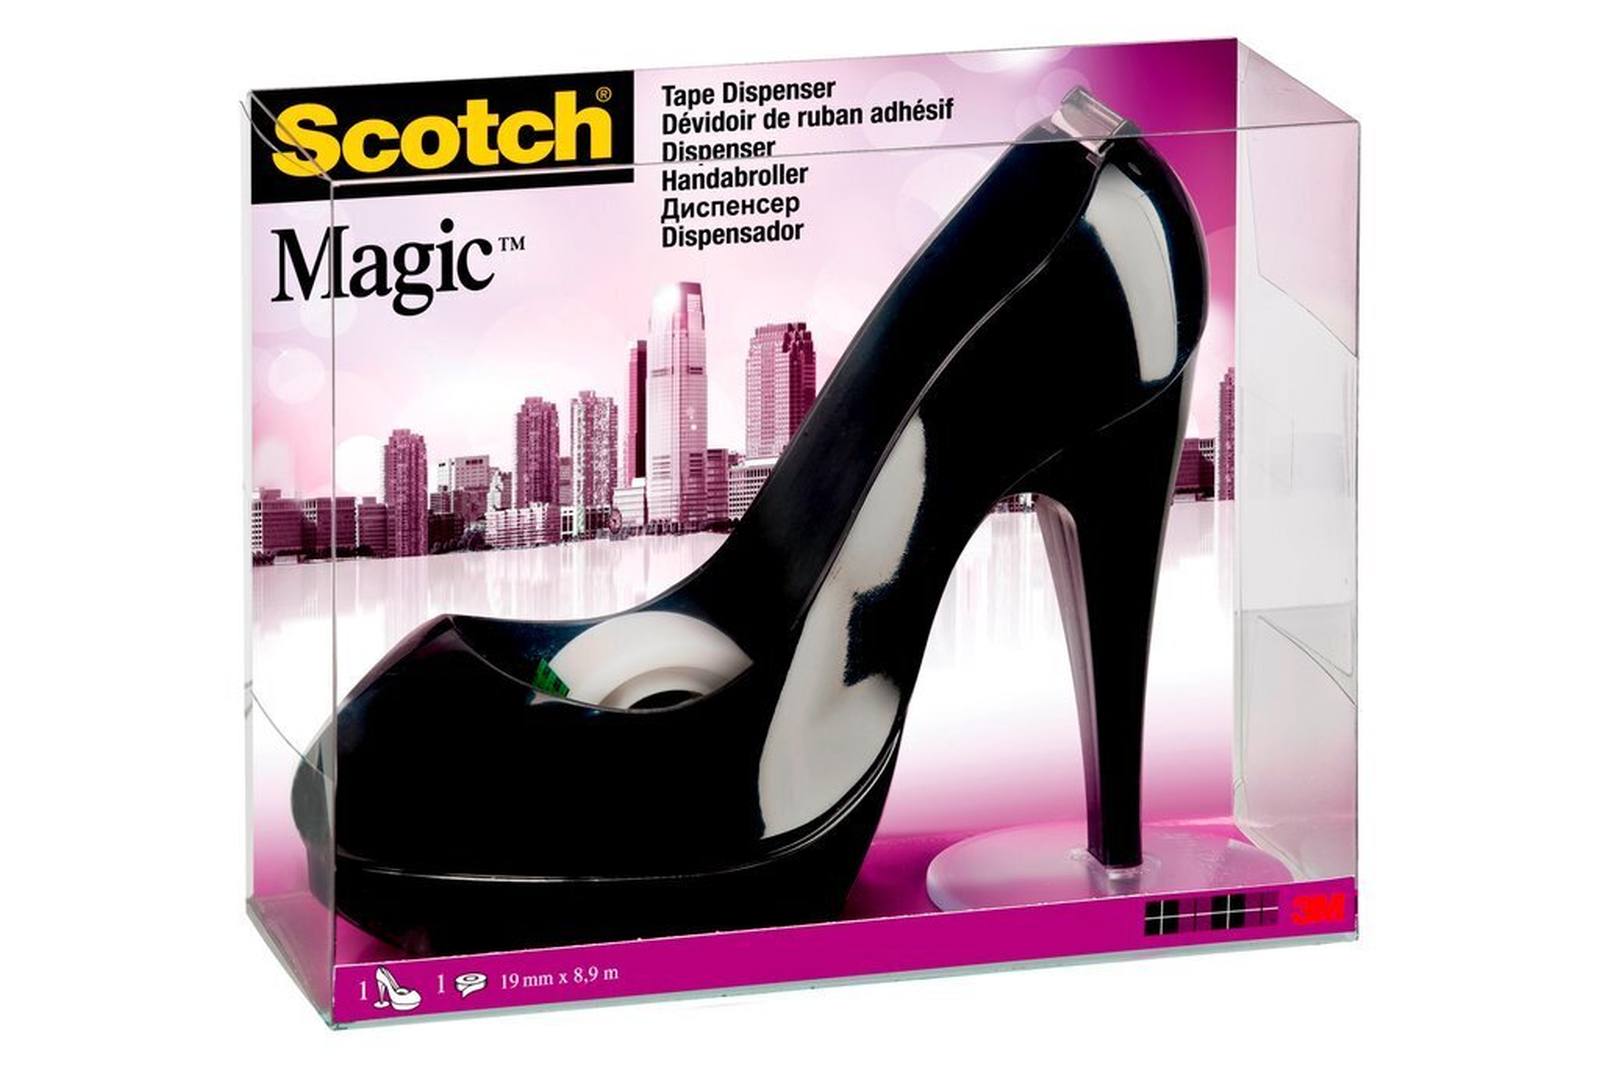 3M Dispensador manual negro en forma de zapato incl. 1 rollo de cinta adhesiva Scotch Magic, 19 mm x 8,9 m